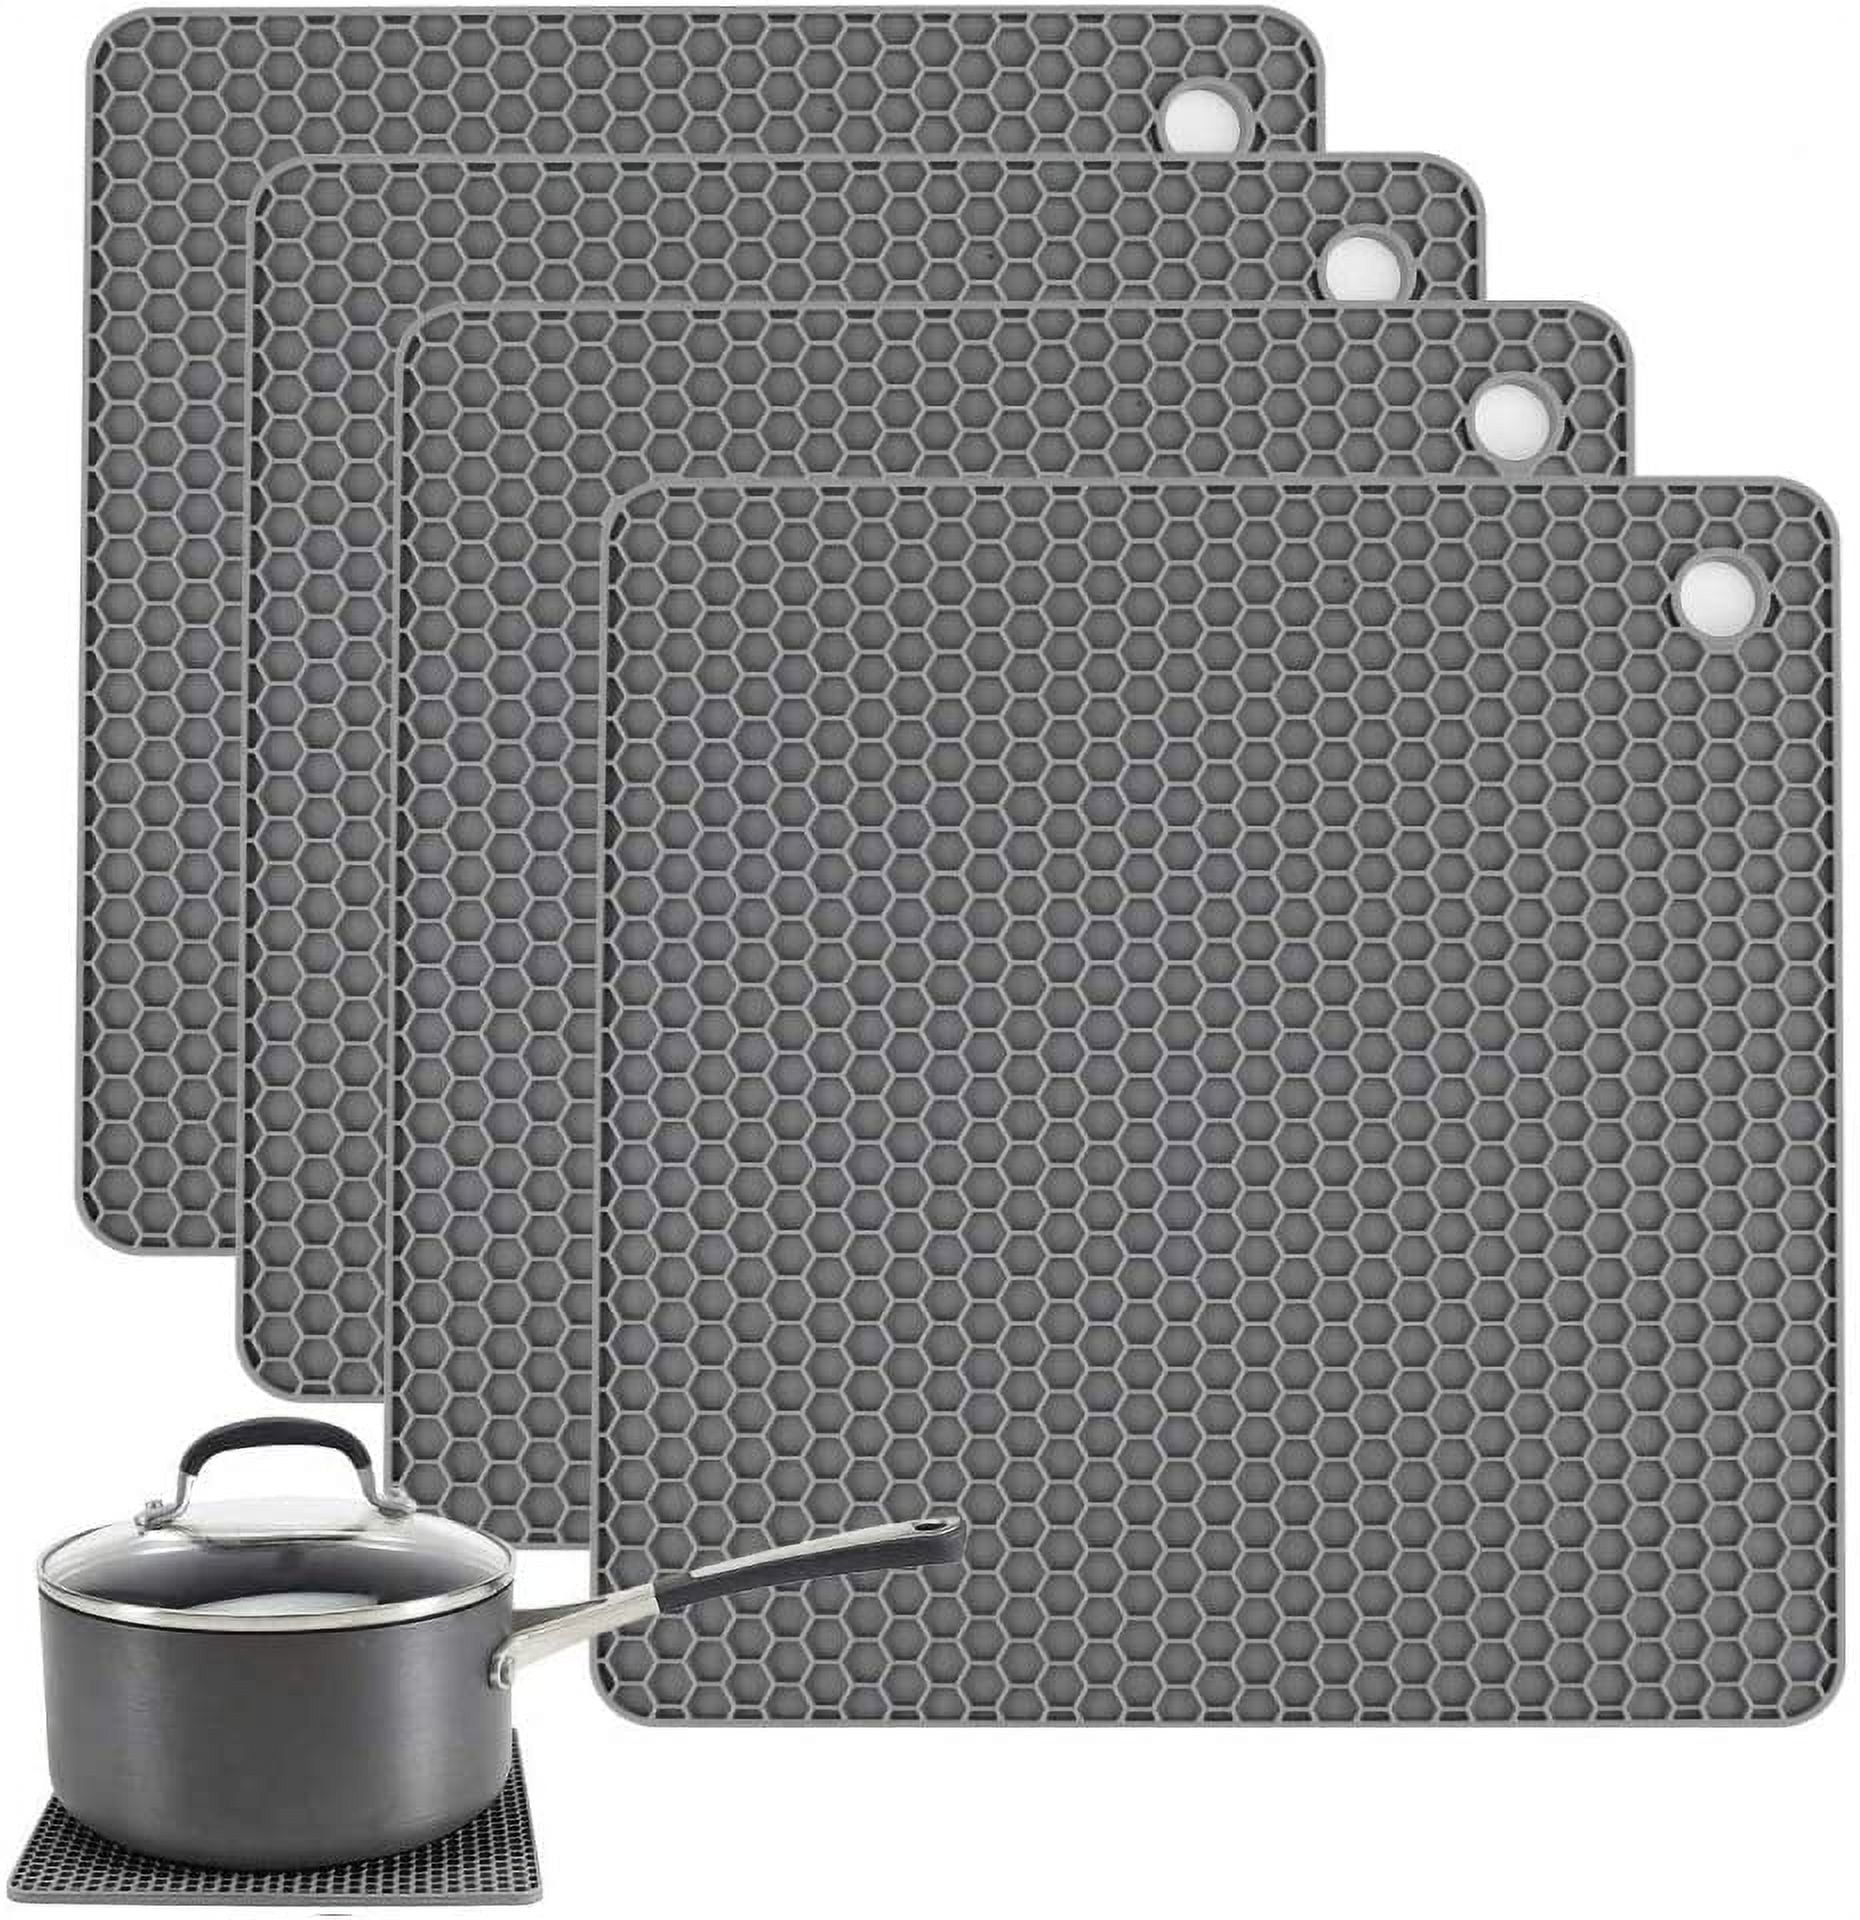 Silicone Trivet Mats Hot Pot Holder Heat Resistant Non-Slip Table  Round-4Pcs Set